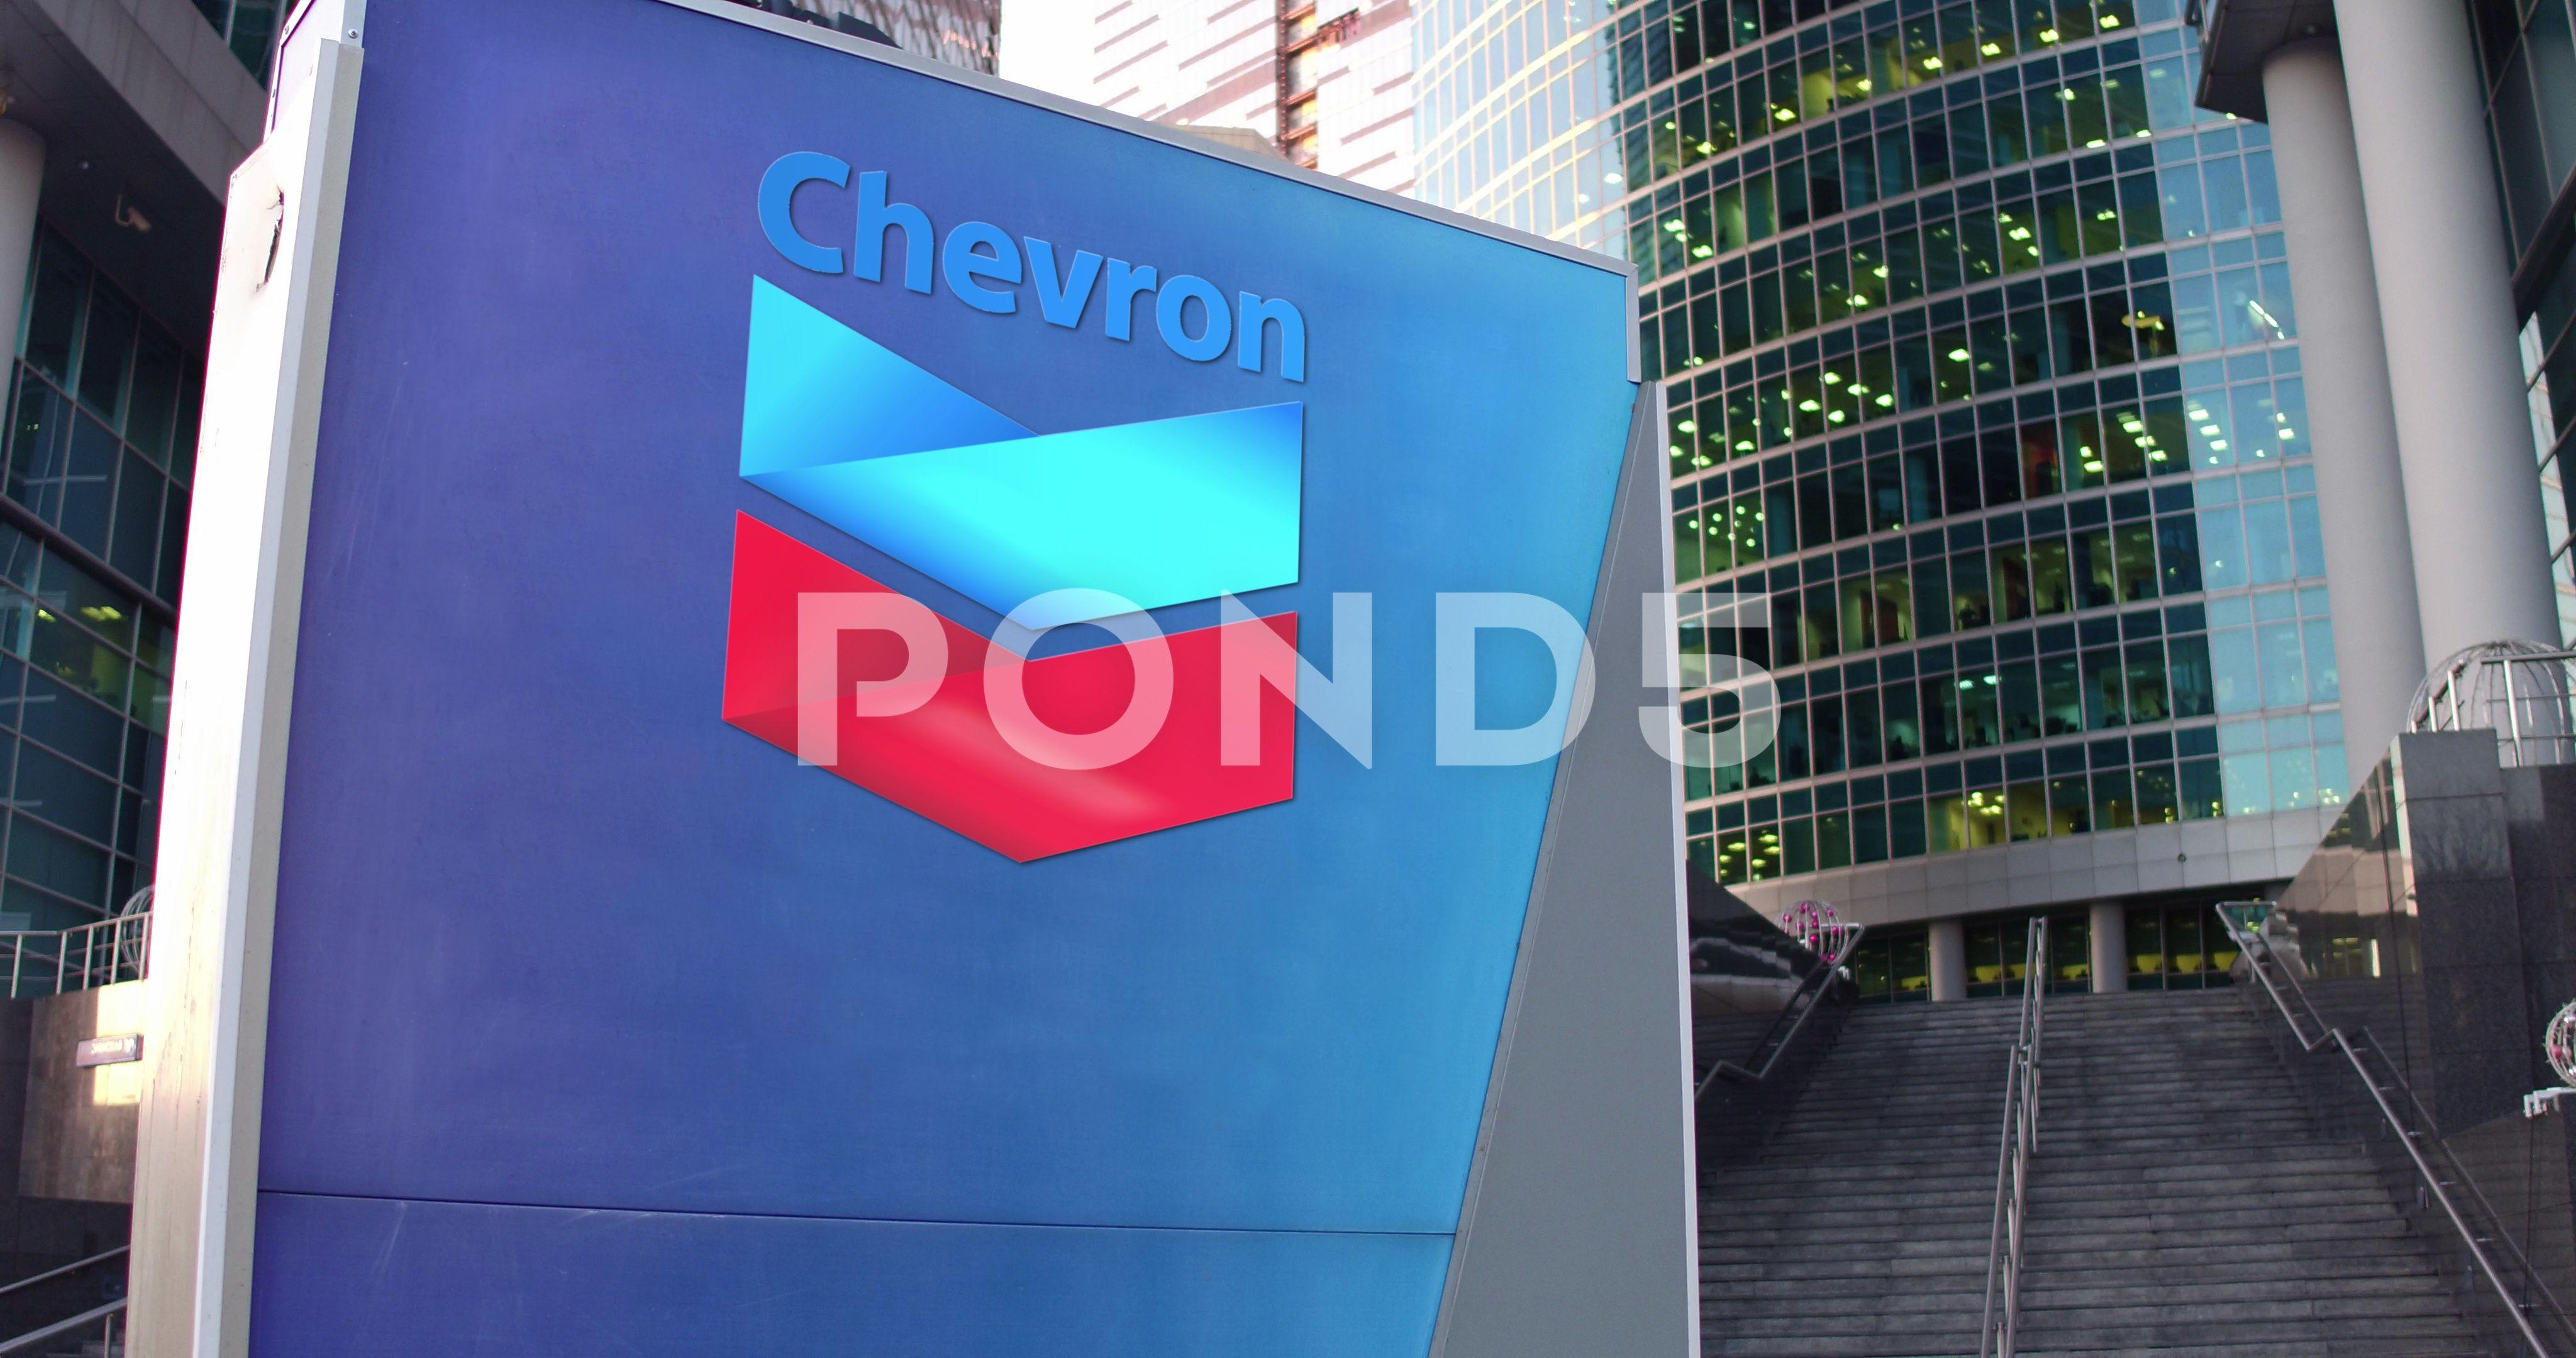 Chevron Corporation Logo - Video: Street signage board with Chevron Corporation logo. Modern